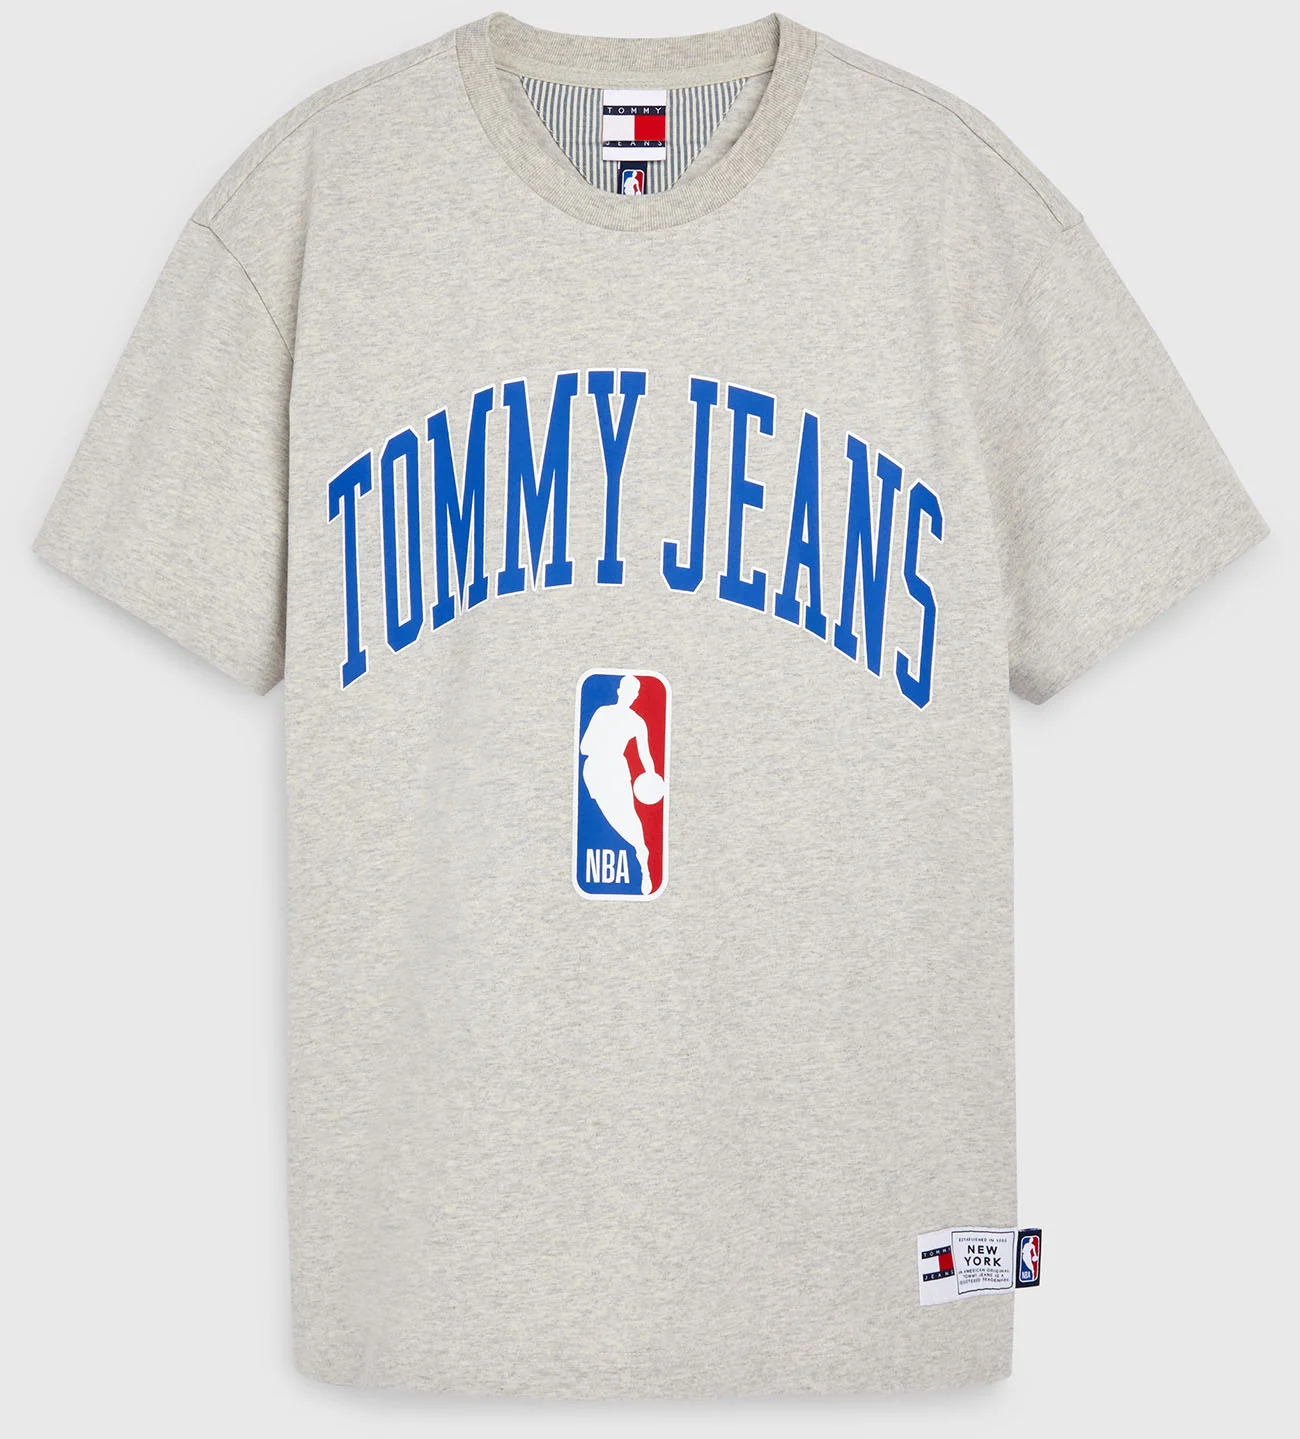 TOMMY JEANS x NBA